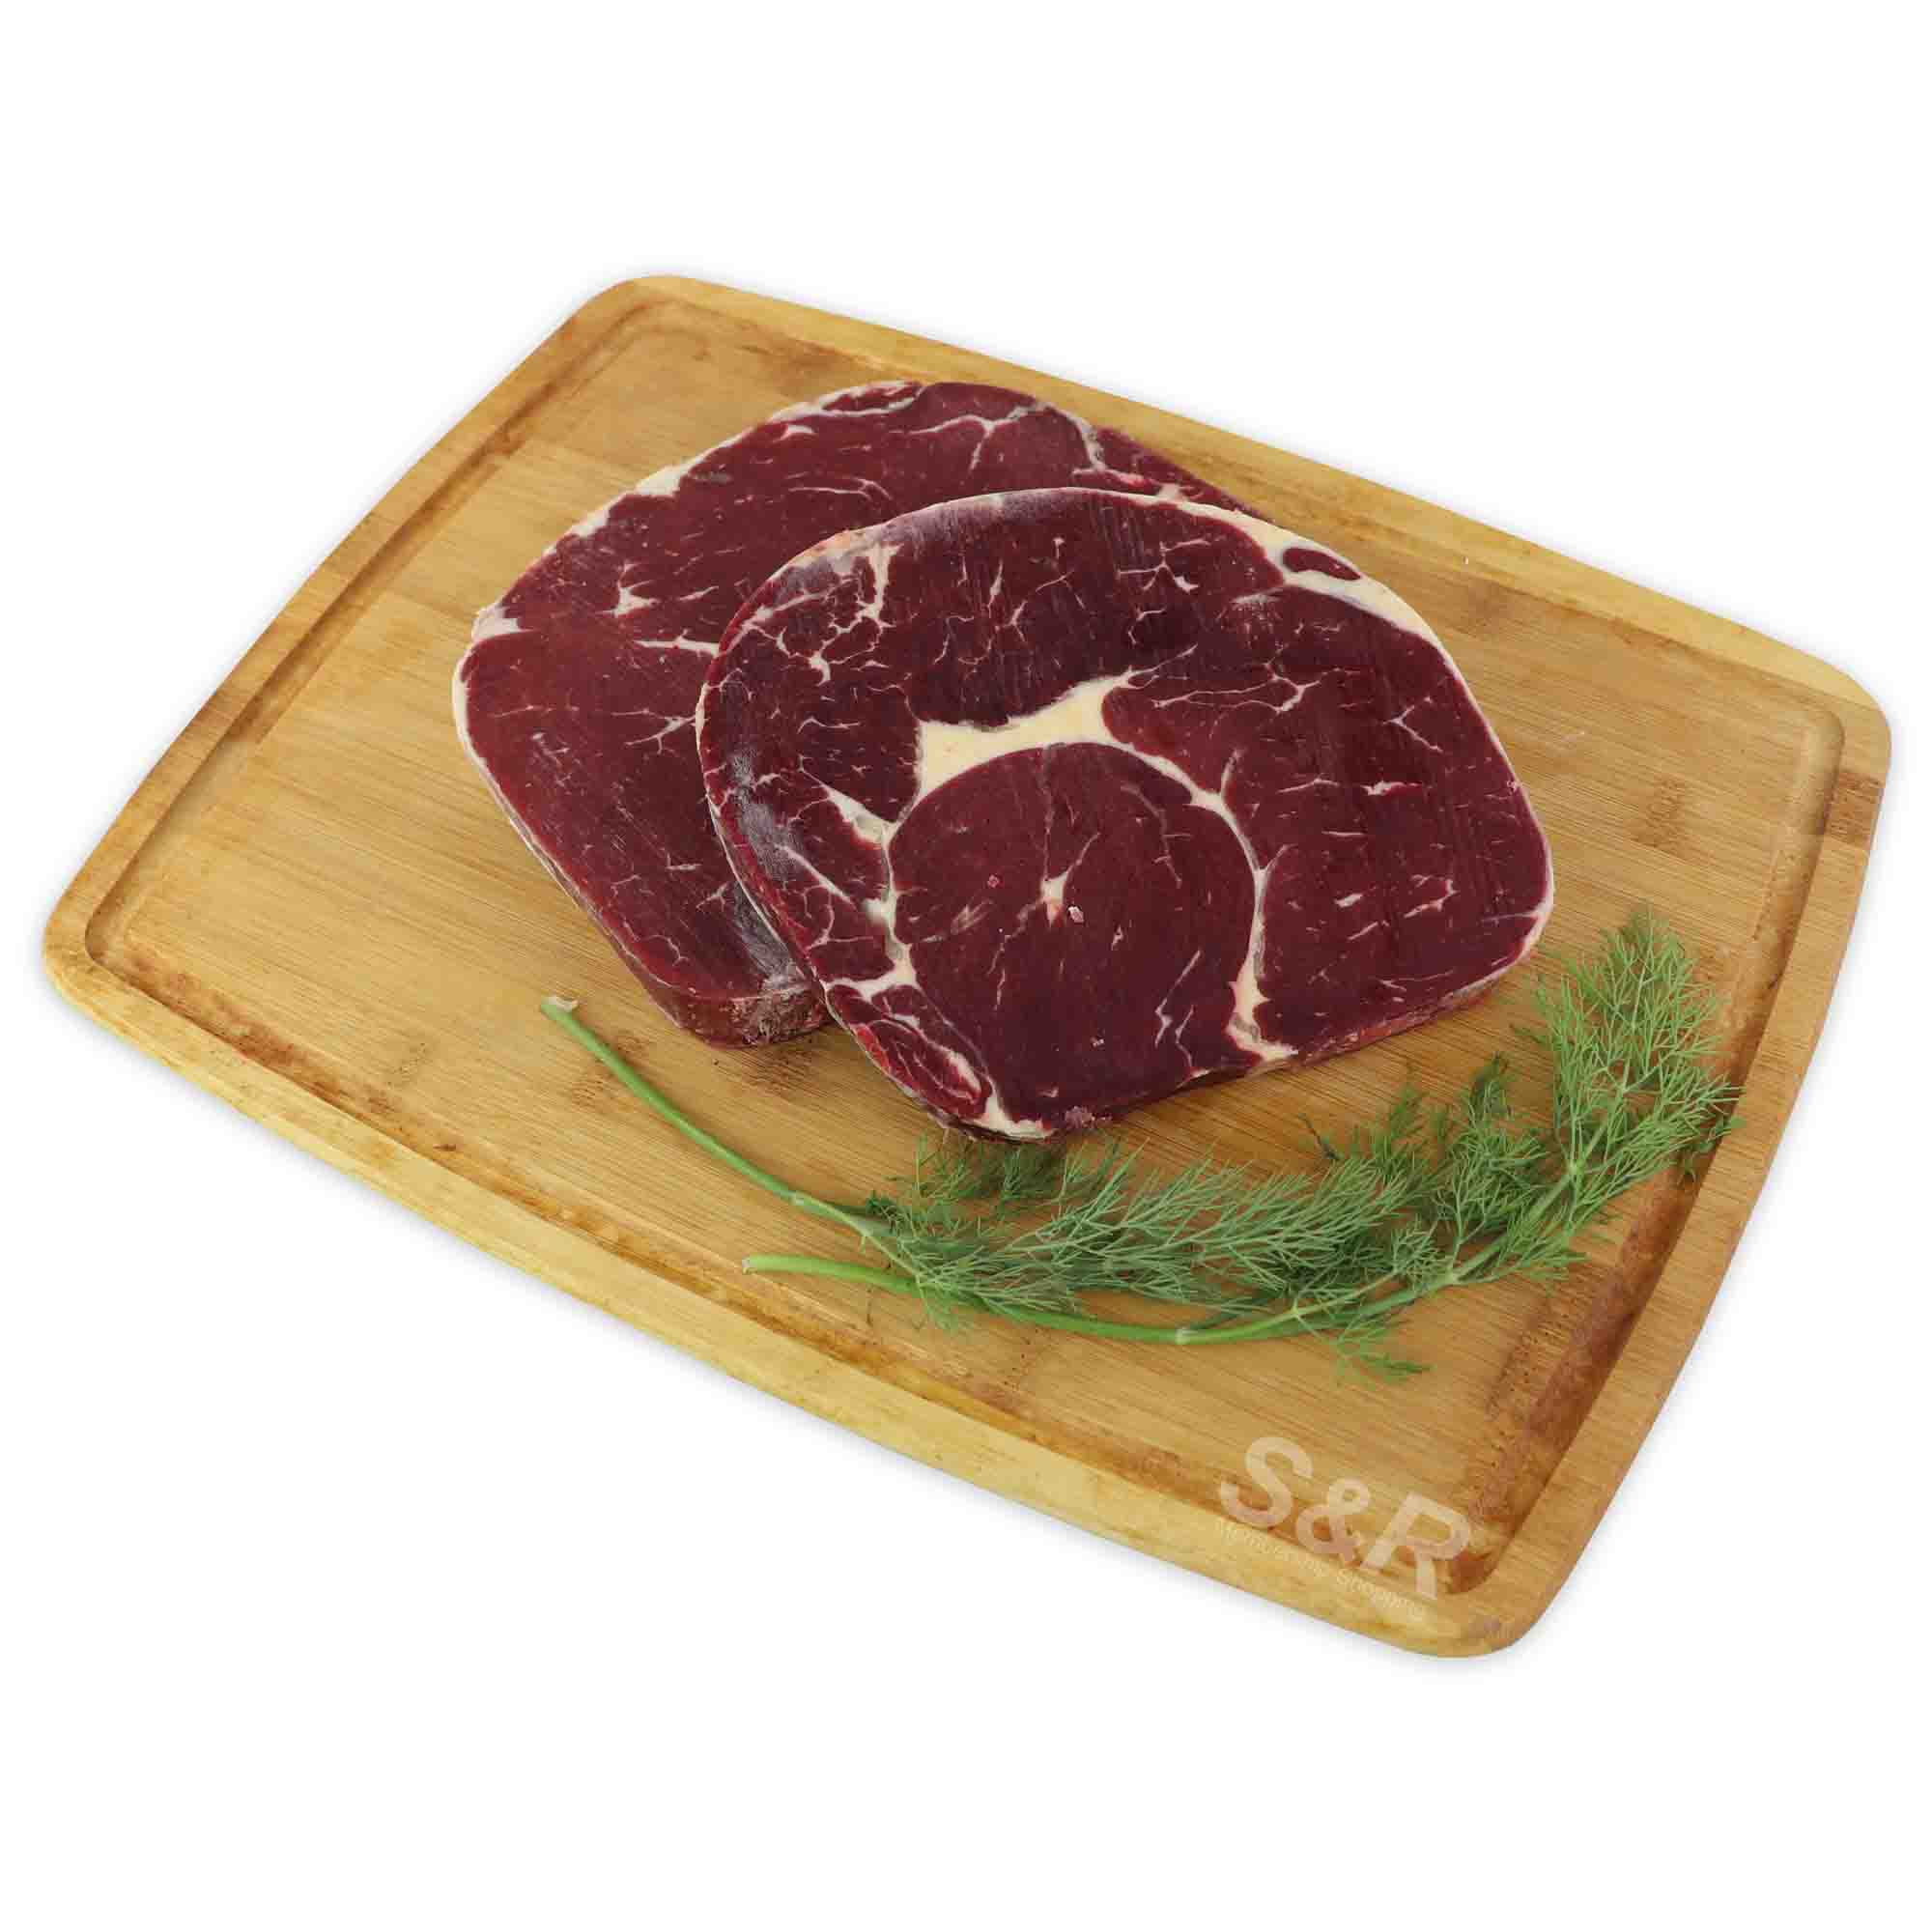 Australia Beef Ribeye Steak approx. 1.2kg